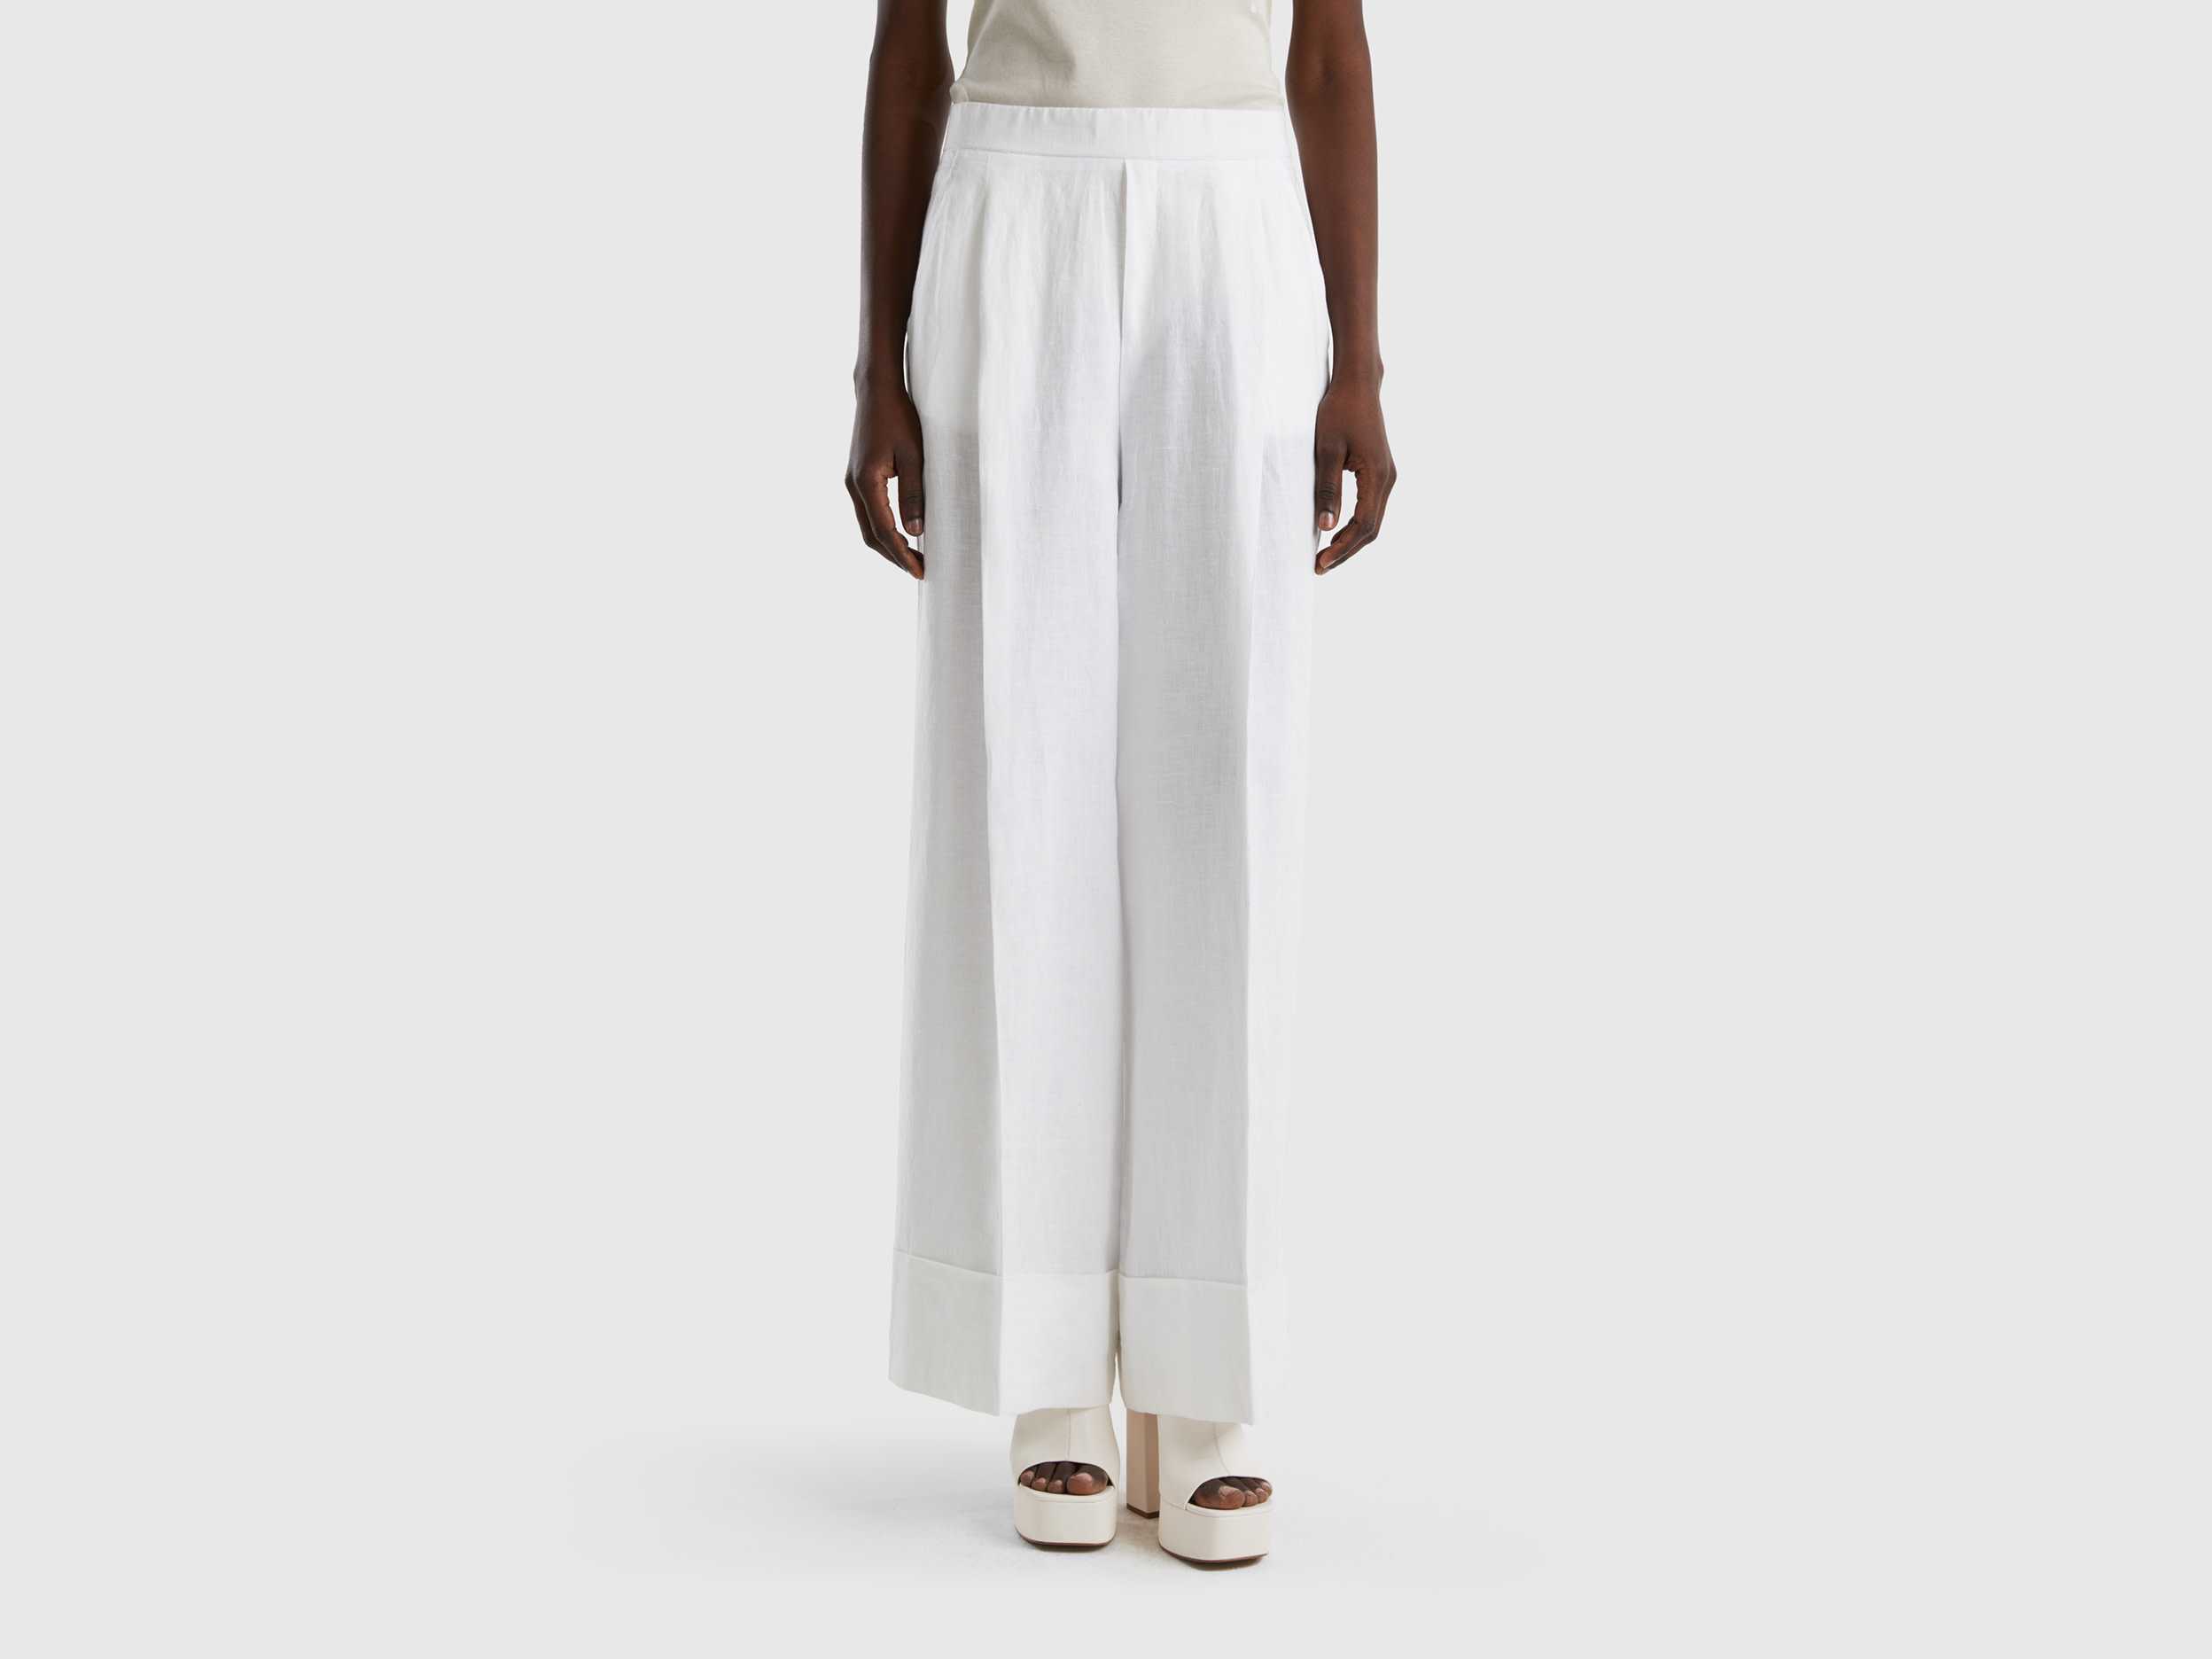 Benetton, Palazzo Trousers In 100% Linen, size M, White, Women